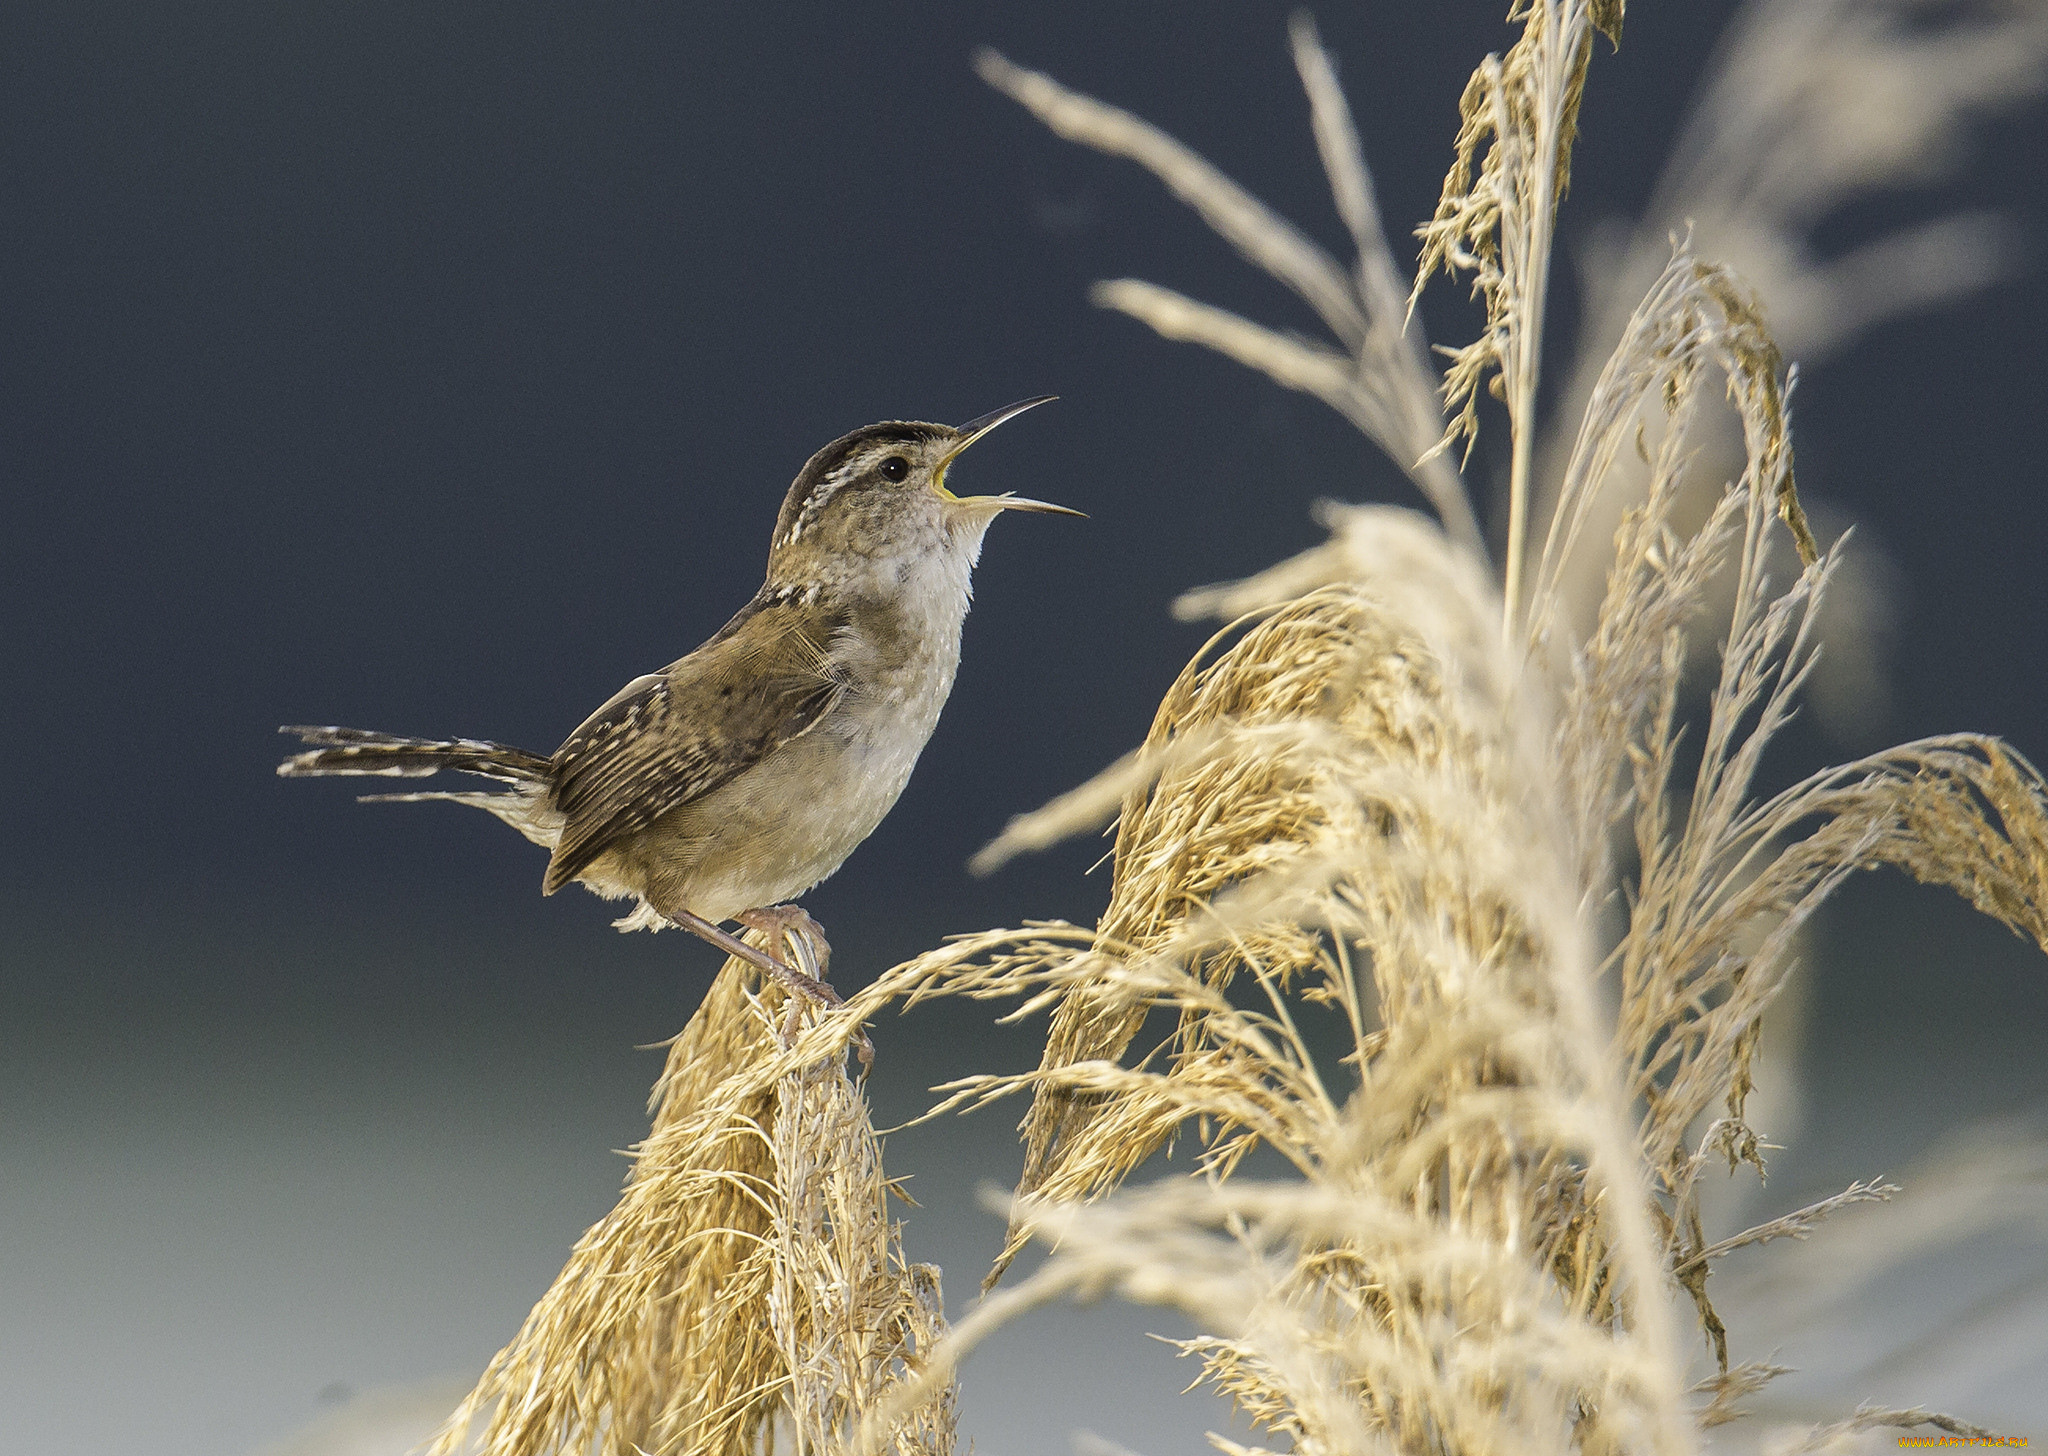 Пшеничная птица. Птичка Пшеничка. Пшеница для птиц. Метелка птица. Птица пшеничного цвета.